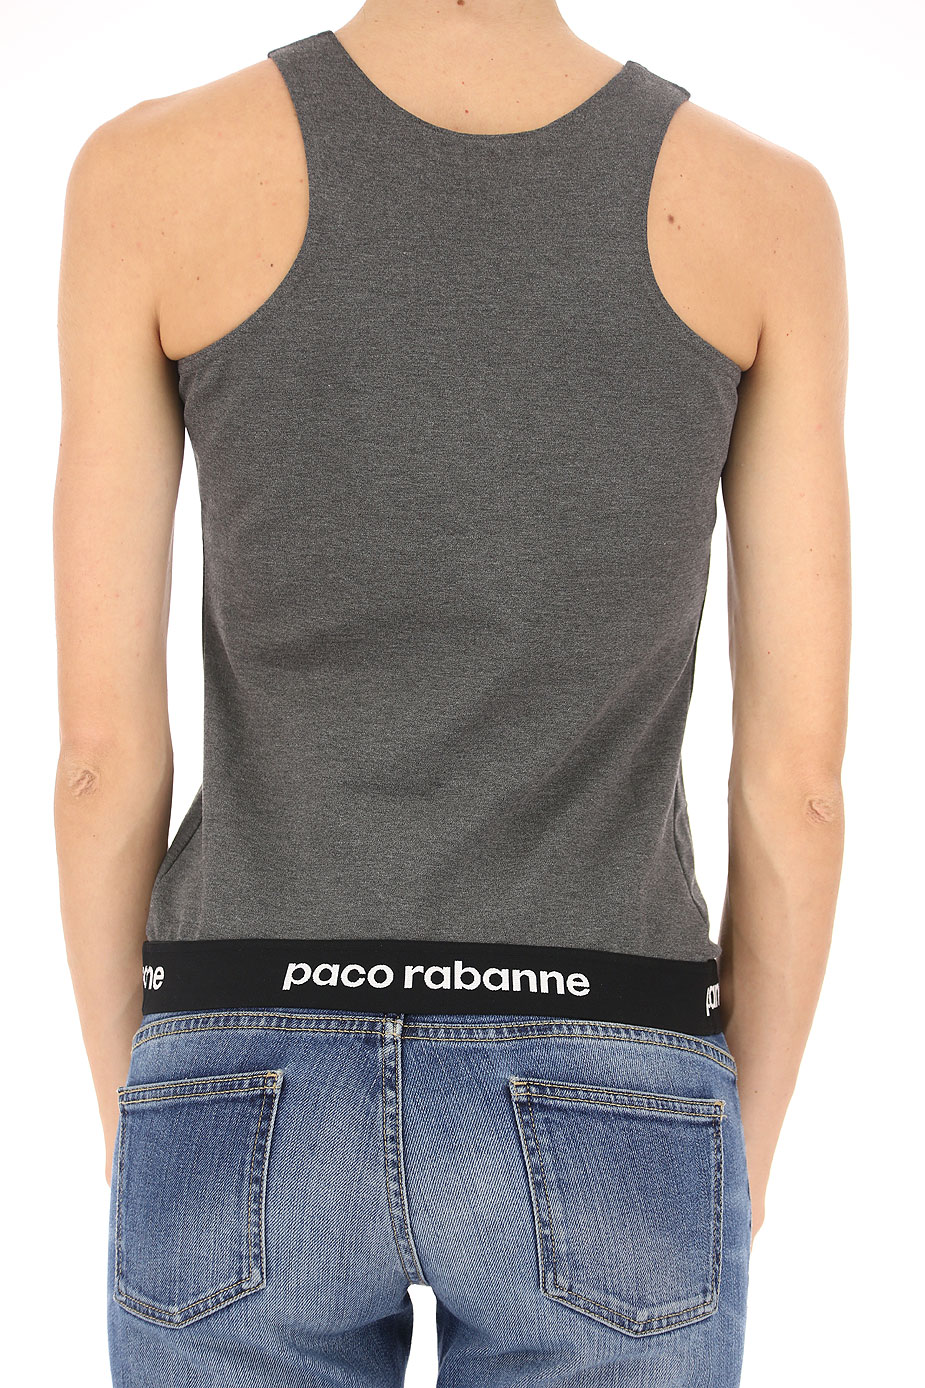 Womens Clothing Paco Rabanne, Style Code: Hjt074vi0001-033- FC8